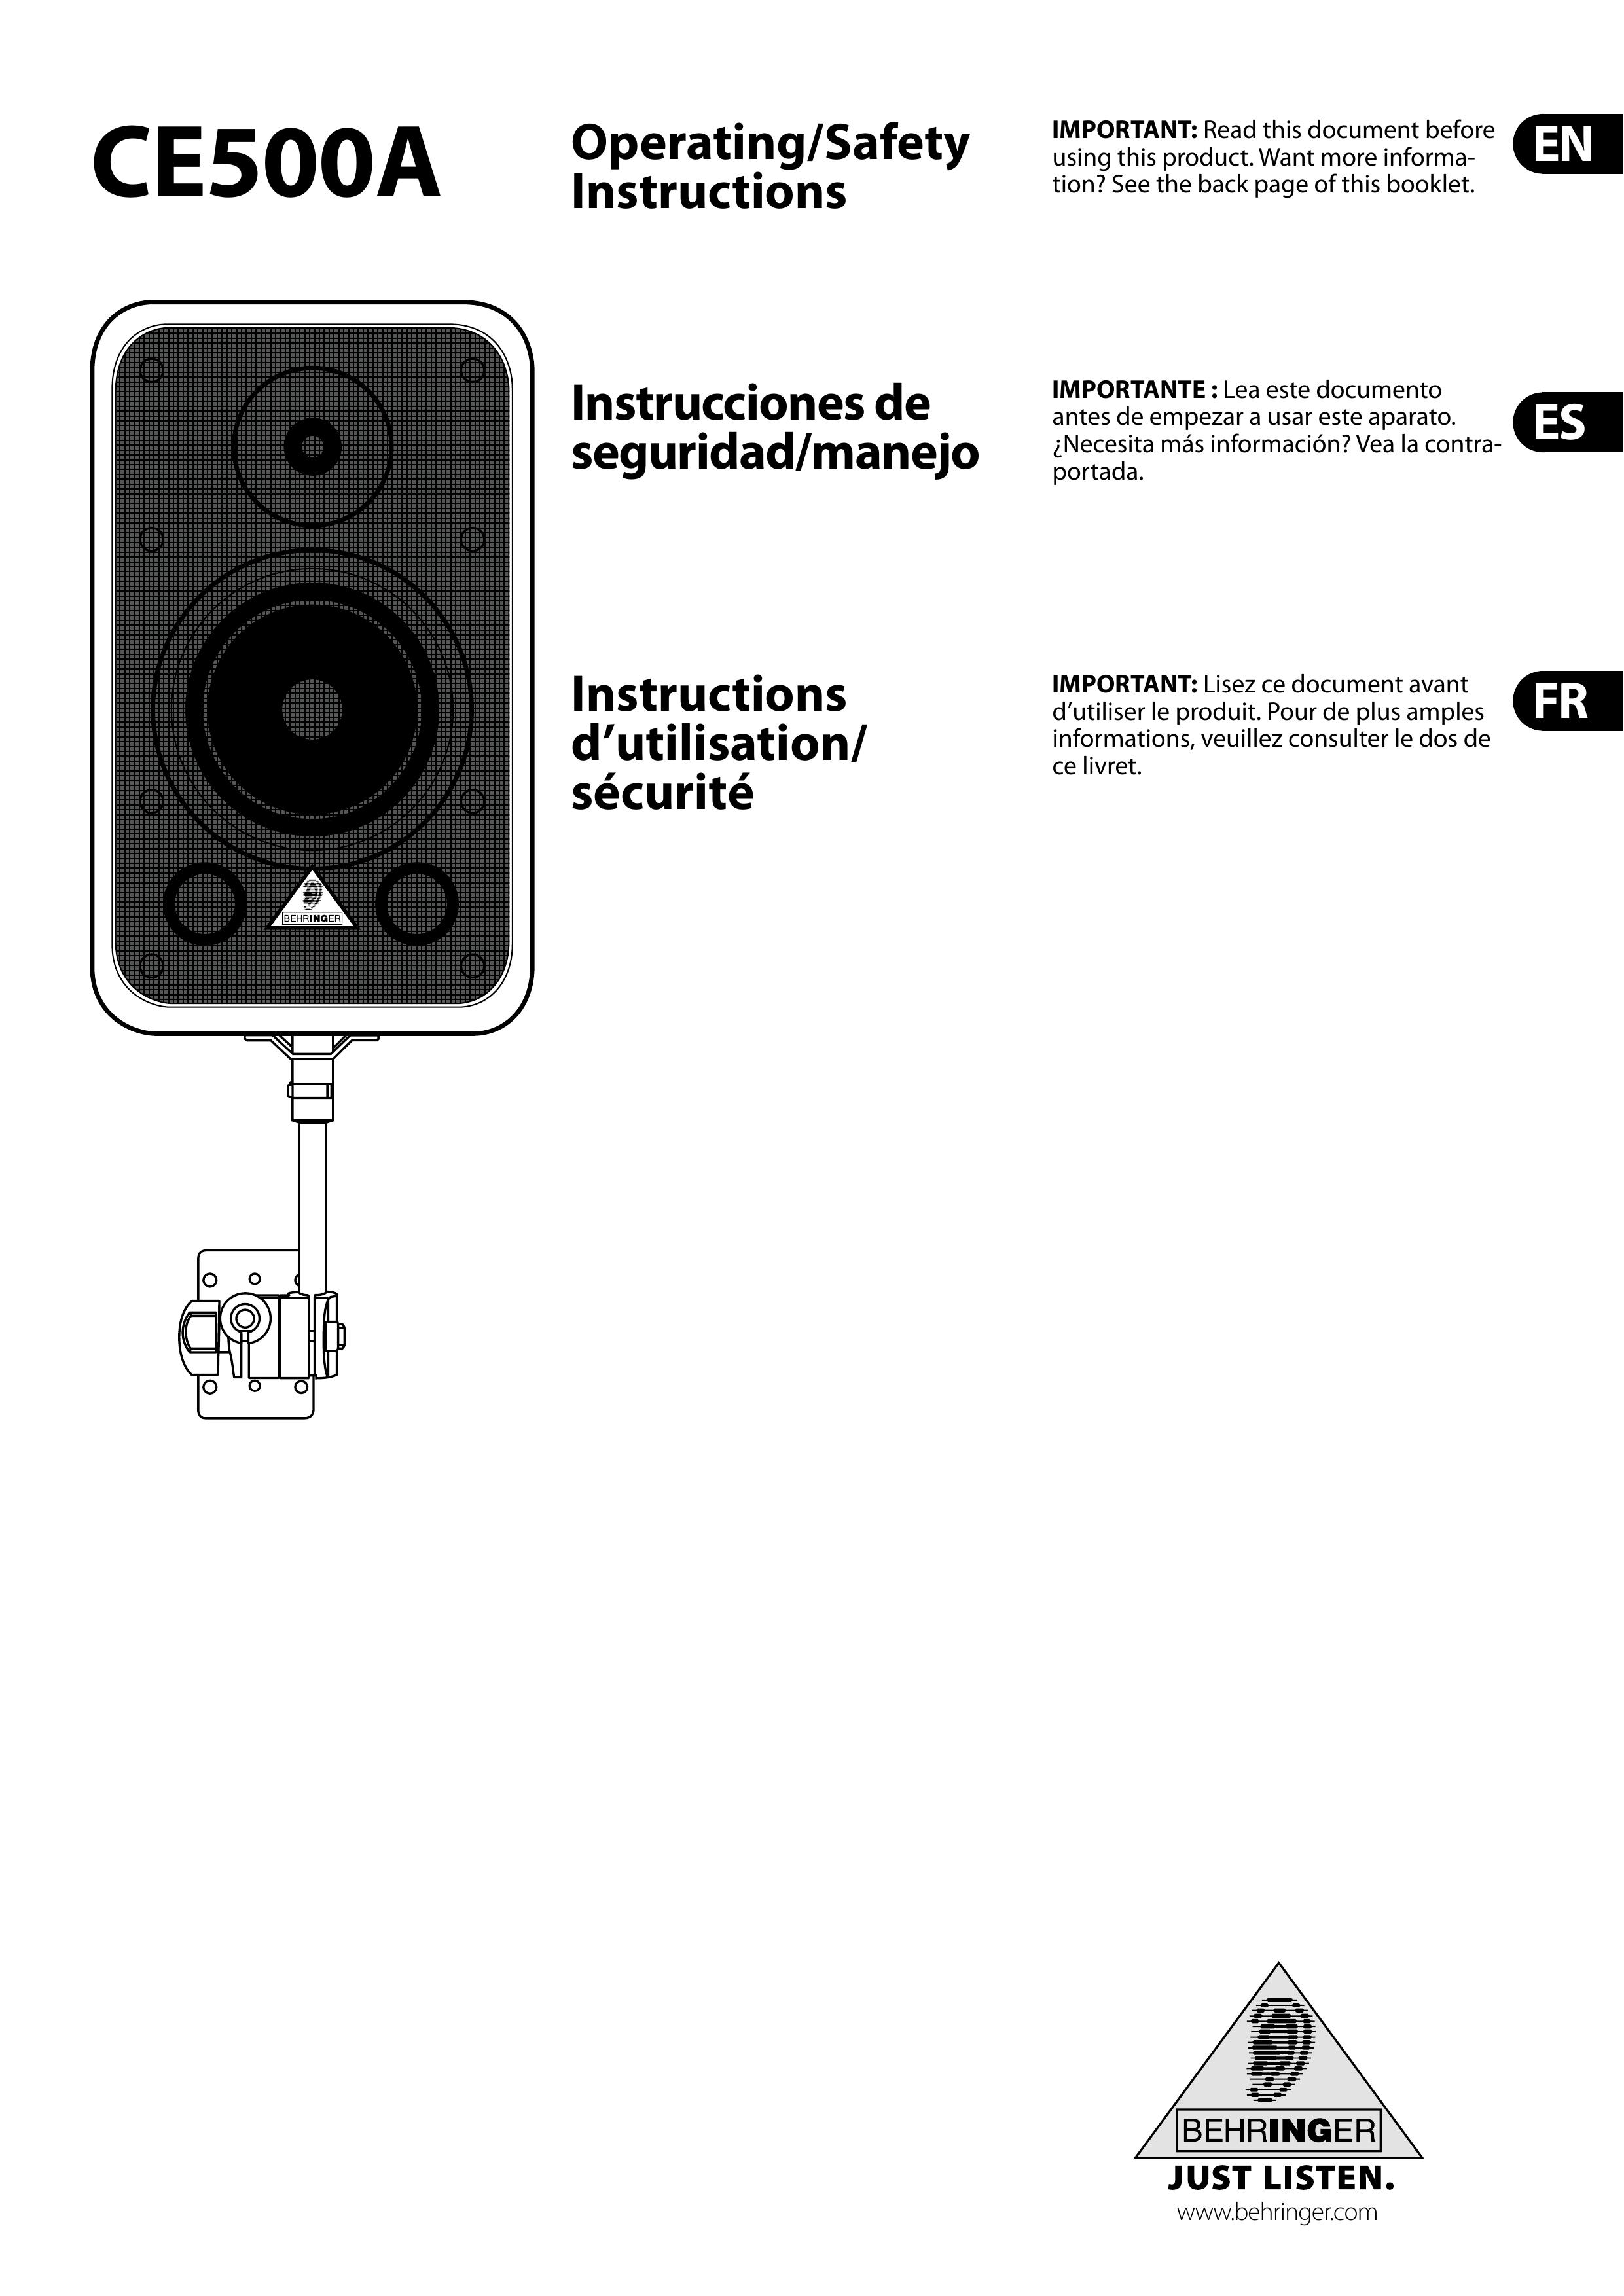 Behringer CE500A Security Camera User Manual